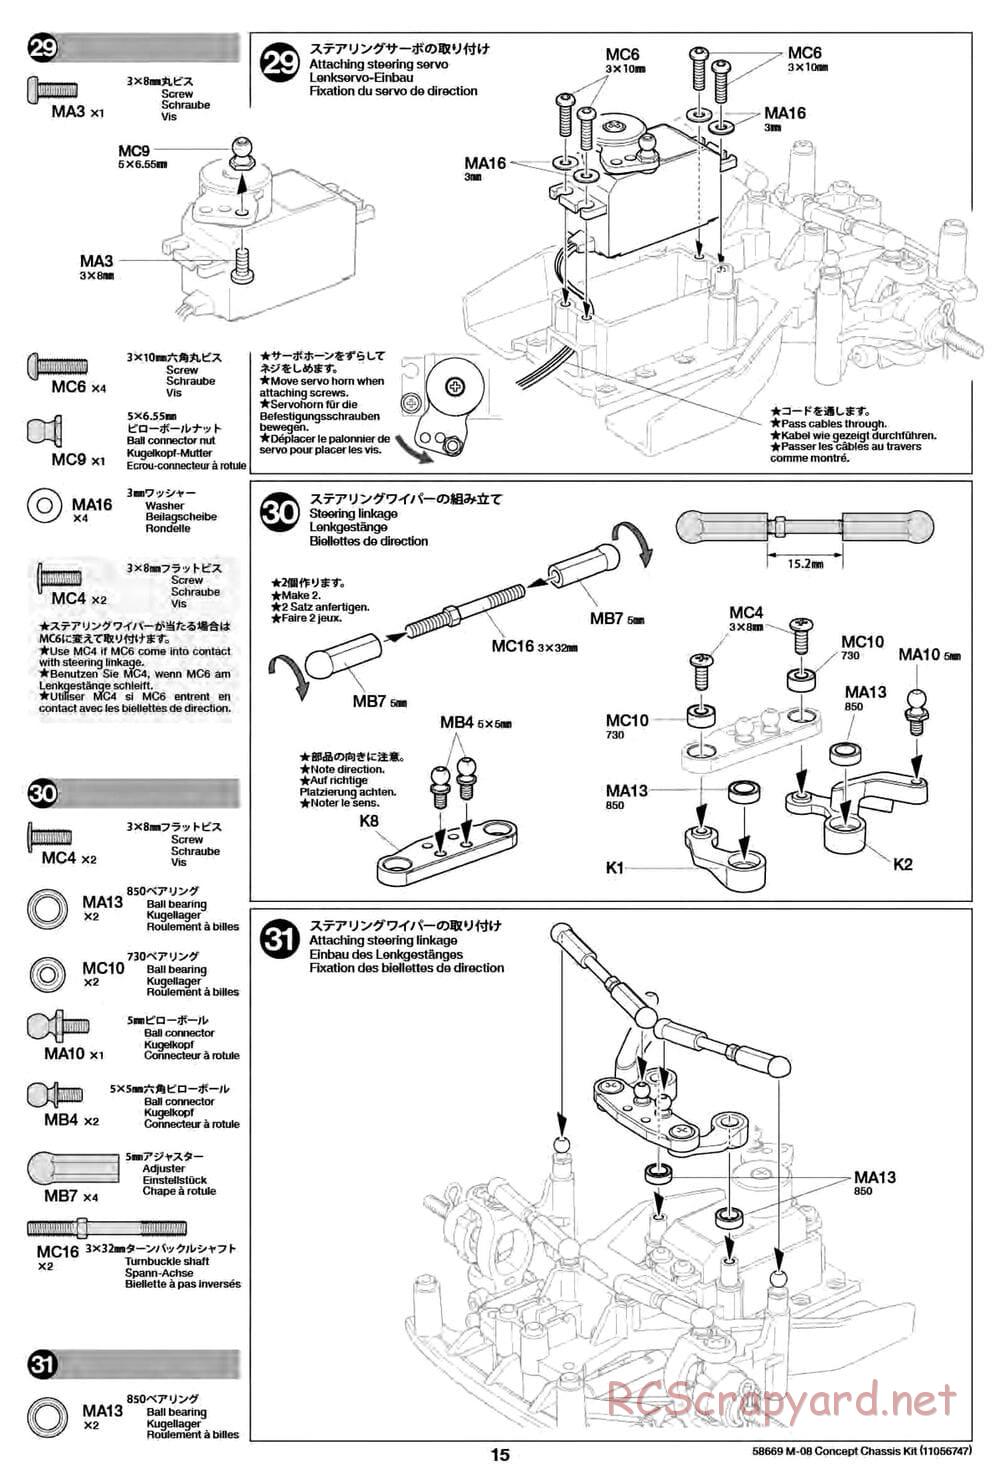 Tamiya - M-08 Concept Chassis - Manual - Page 15